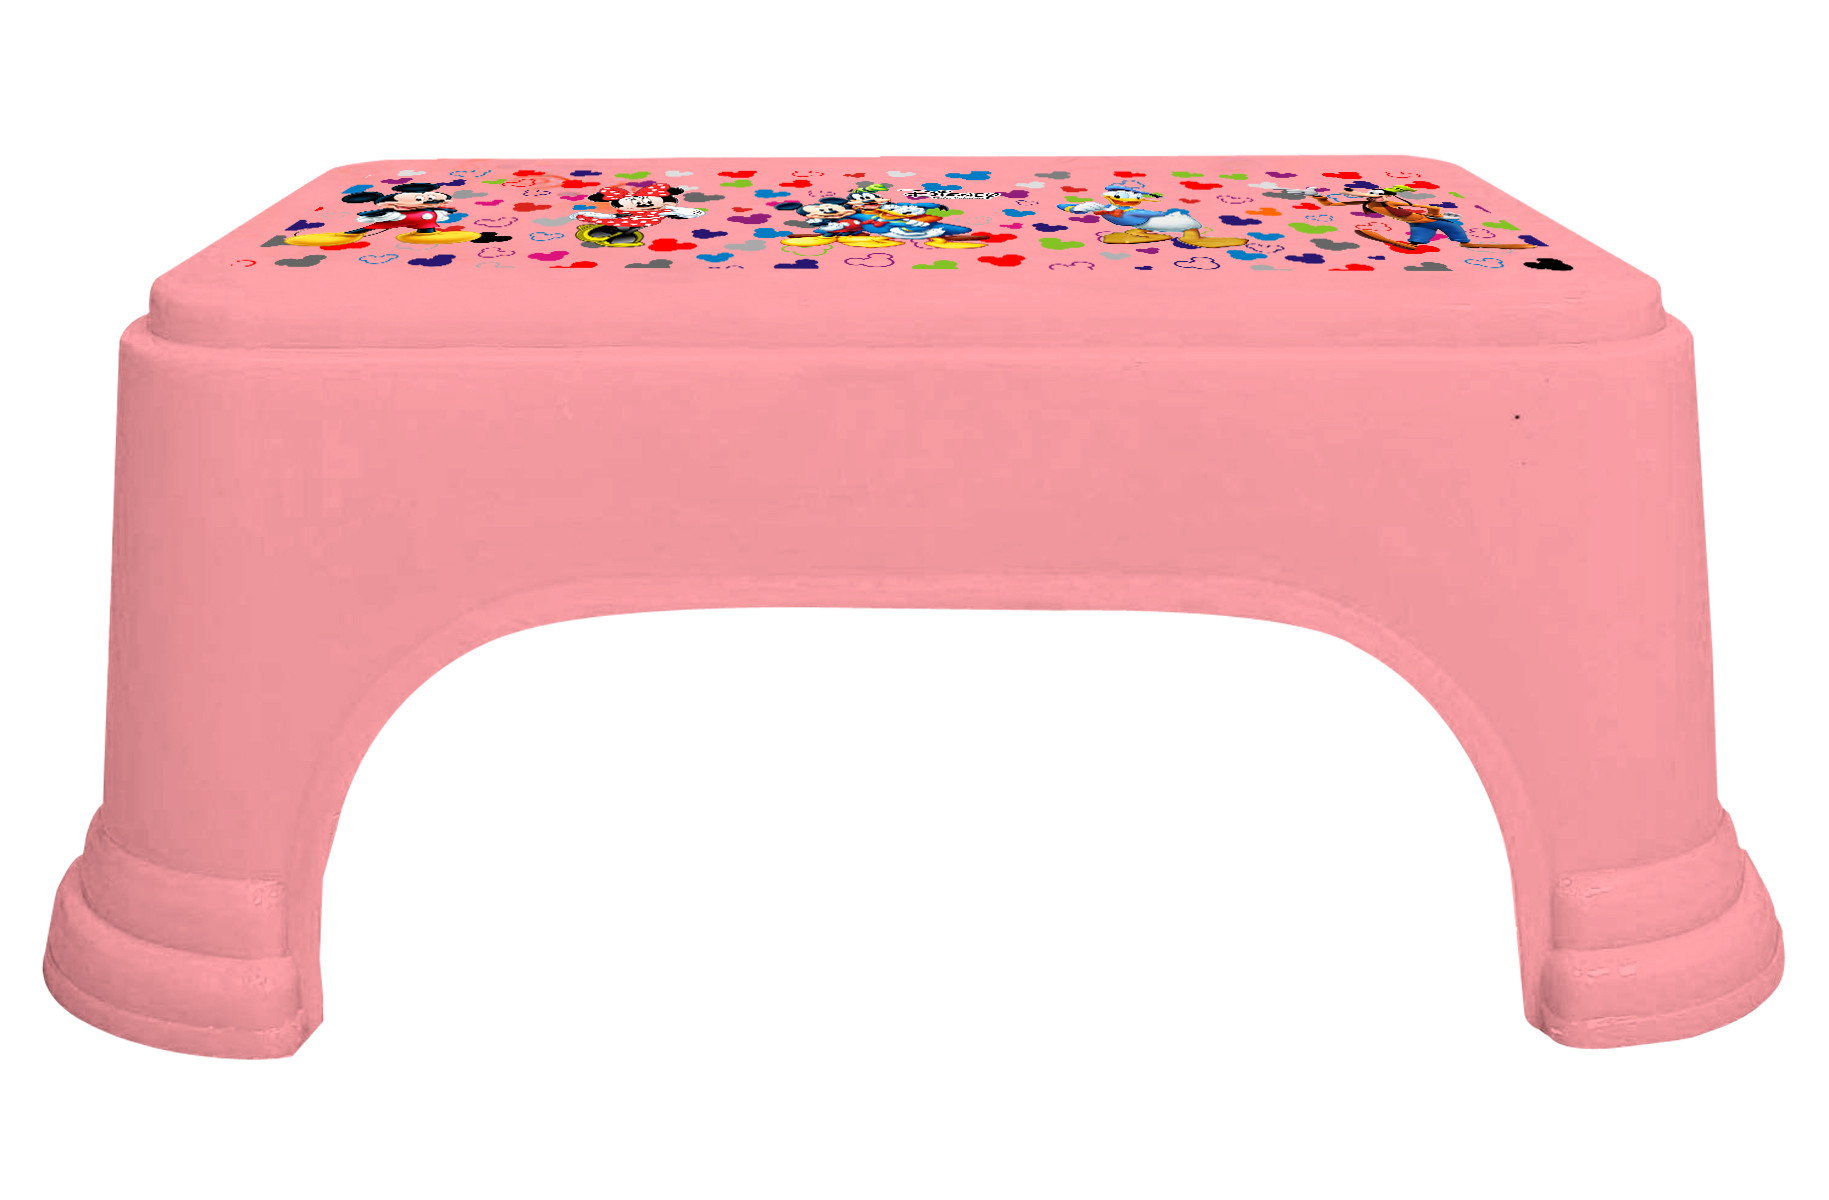 Kuber Industries Disney Team Mickey Print Square Plastic Bathroom Stool (Pink) -HS_35_KUBMART17253